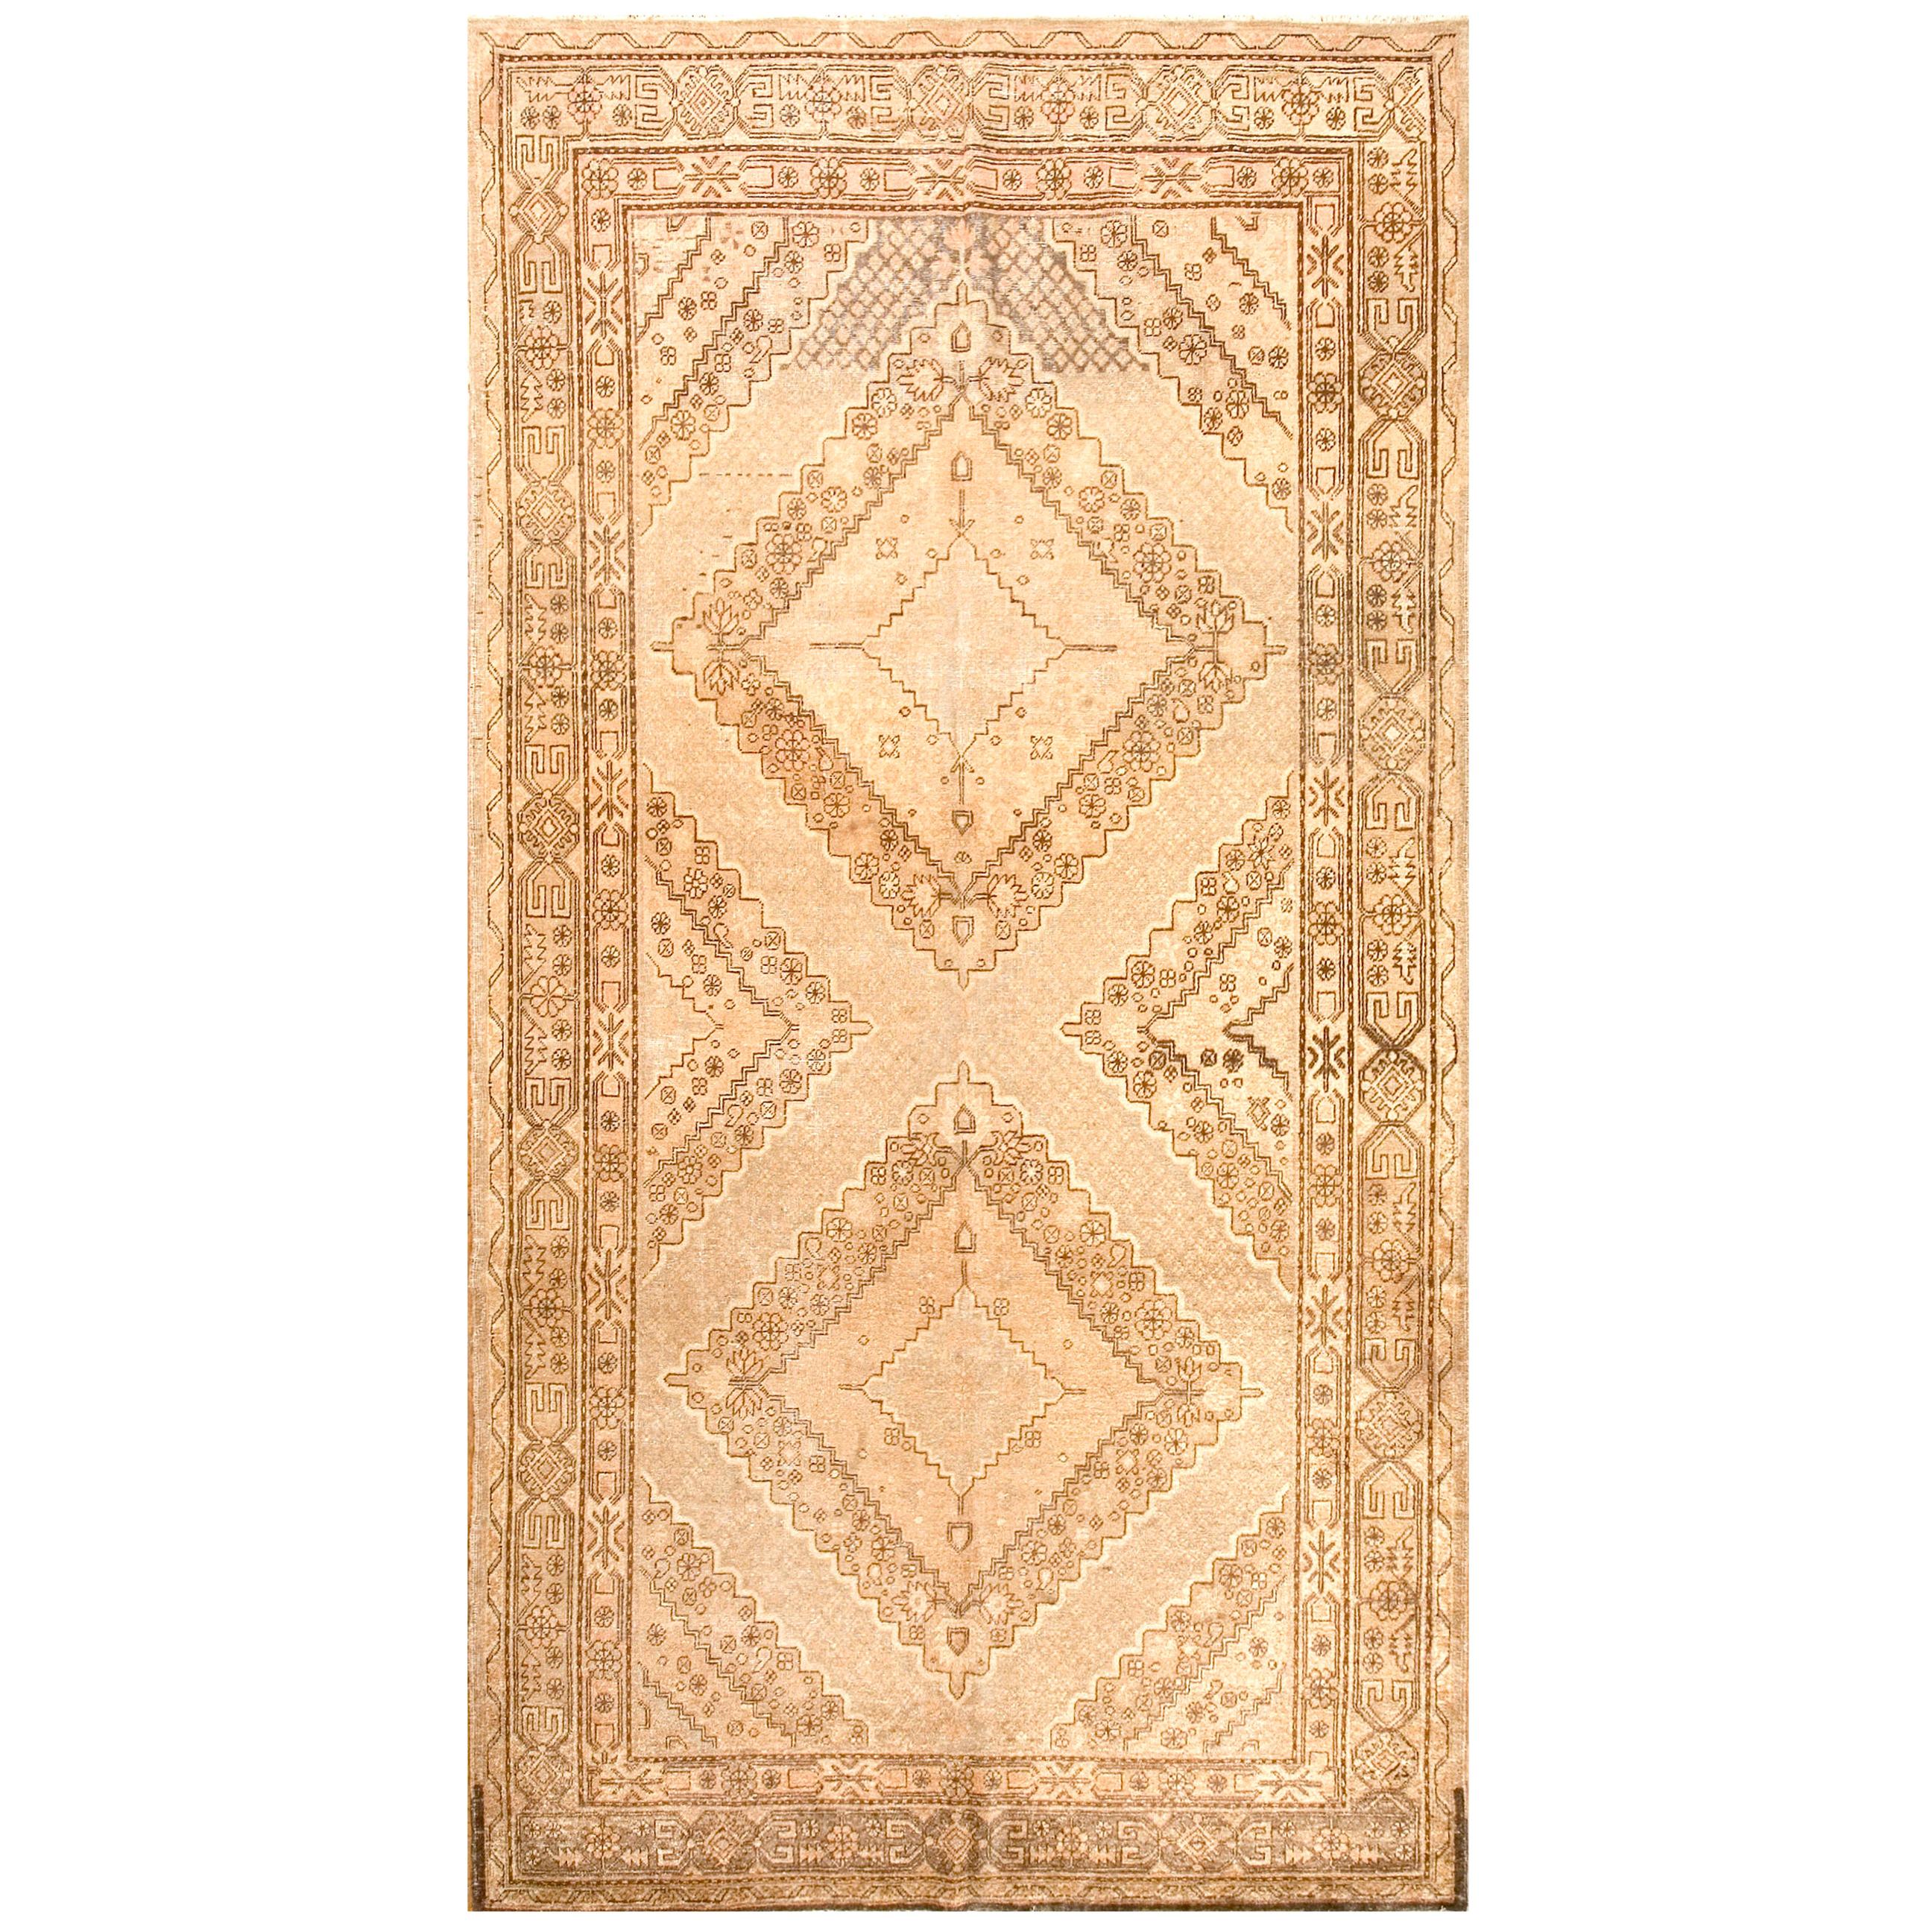 Early 20th Century Central Asian Khotan Carpet ( 6'9" x 12'9" - 206 x 389 )